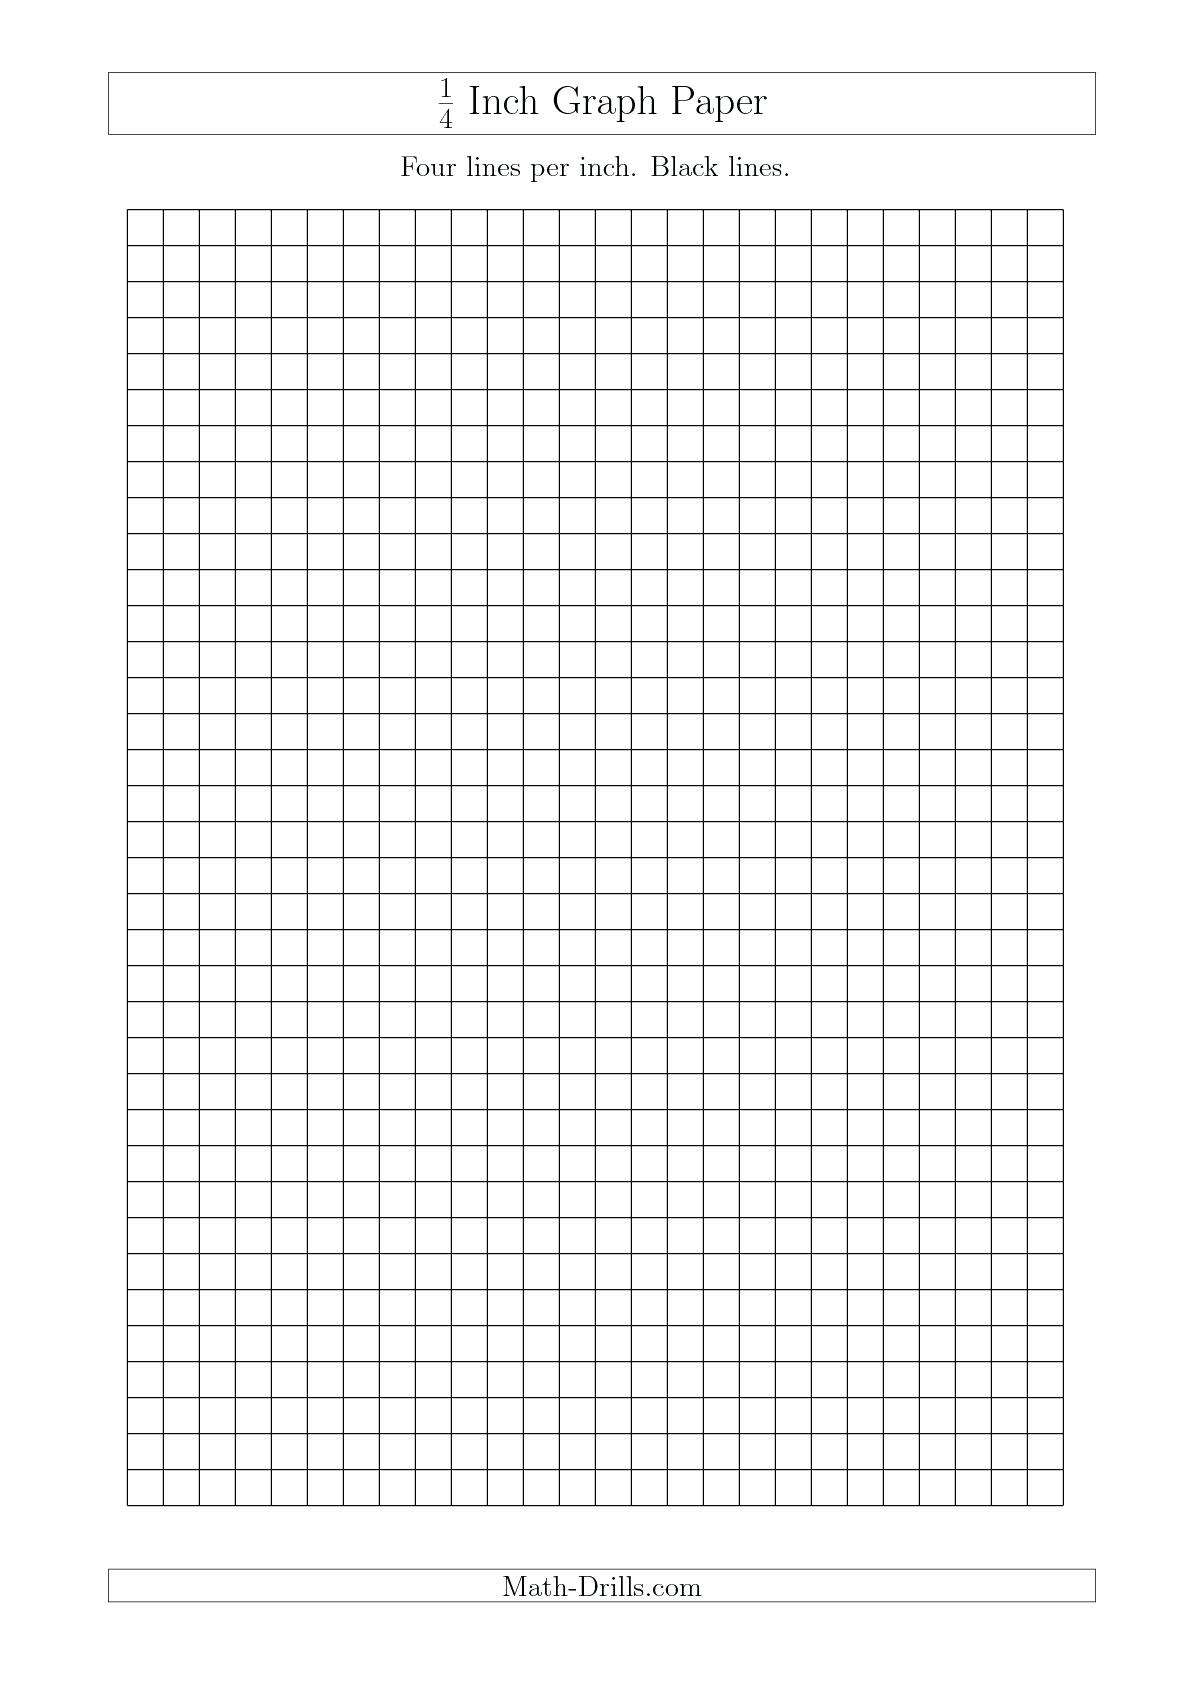 Free Printable Graph Paper 1 4 Inch - Free Printable